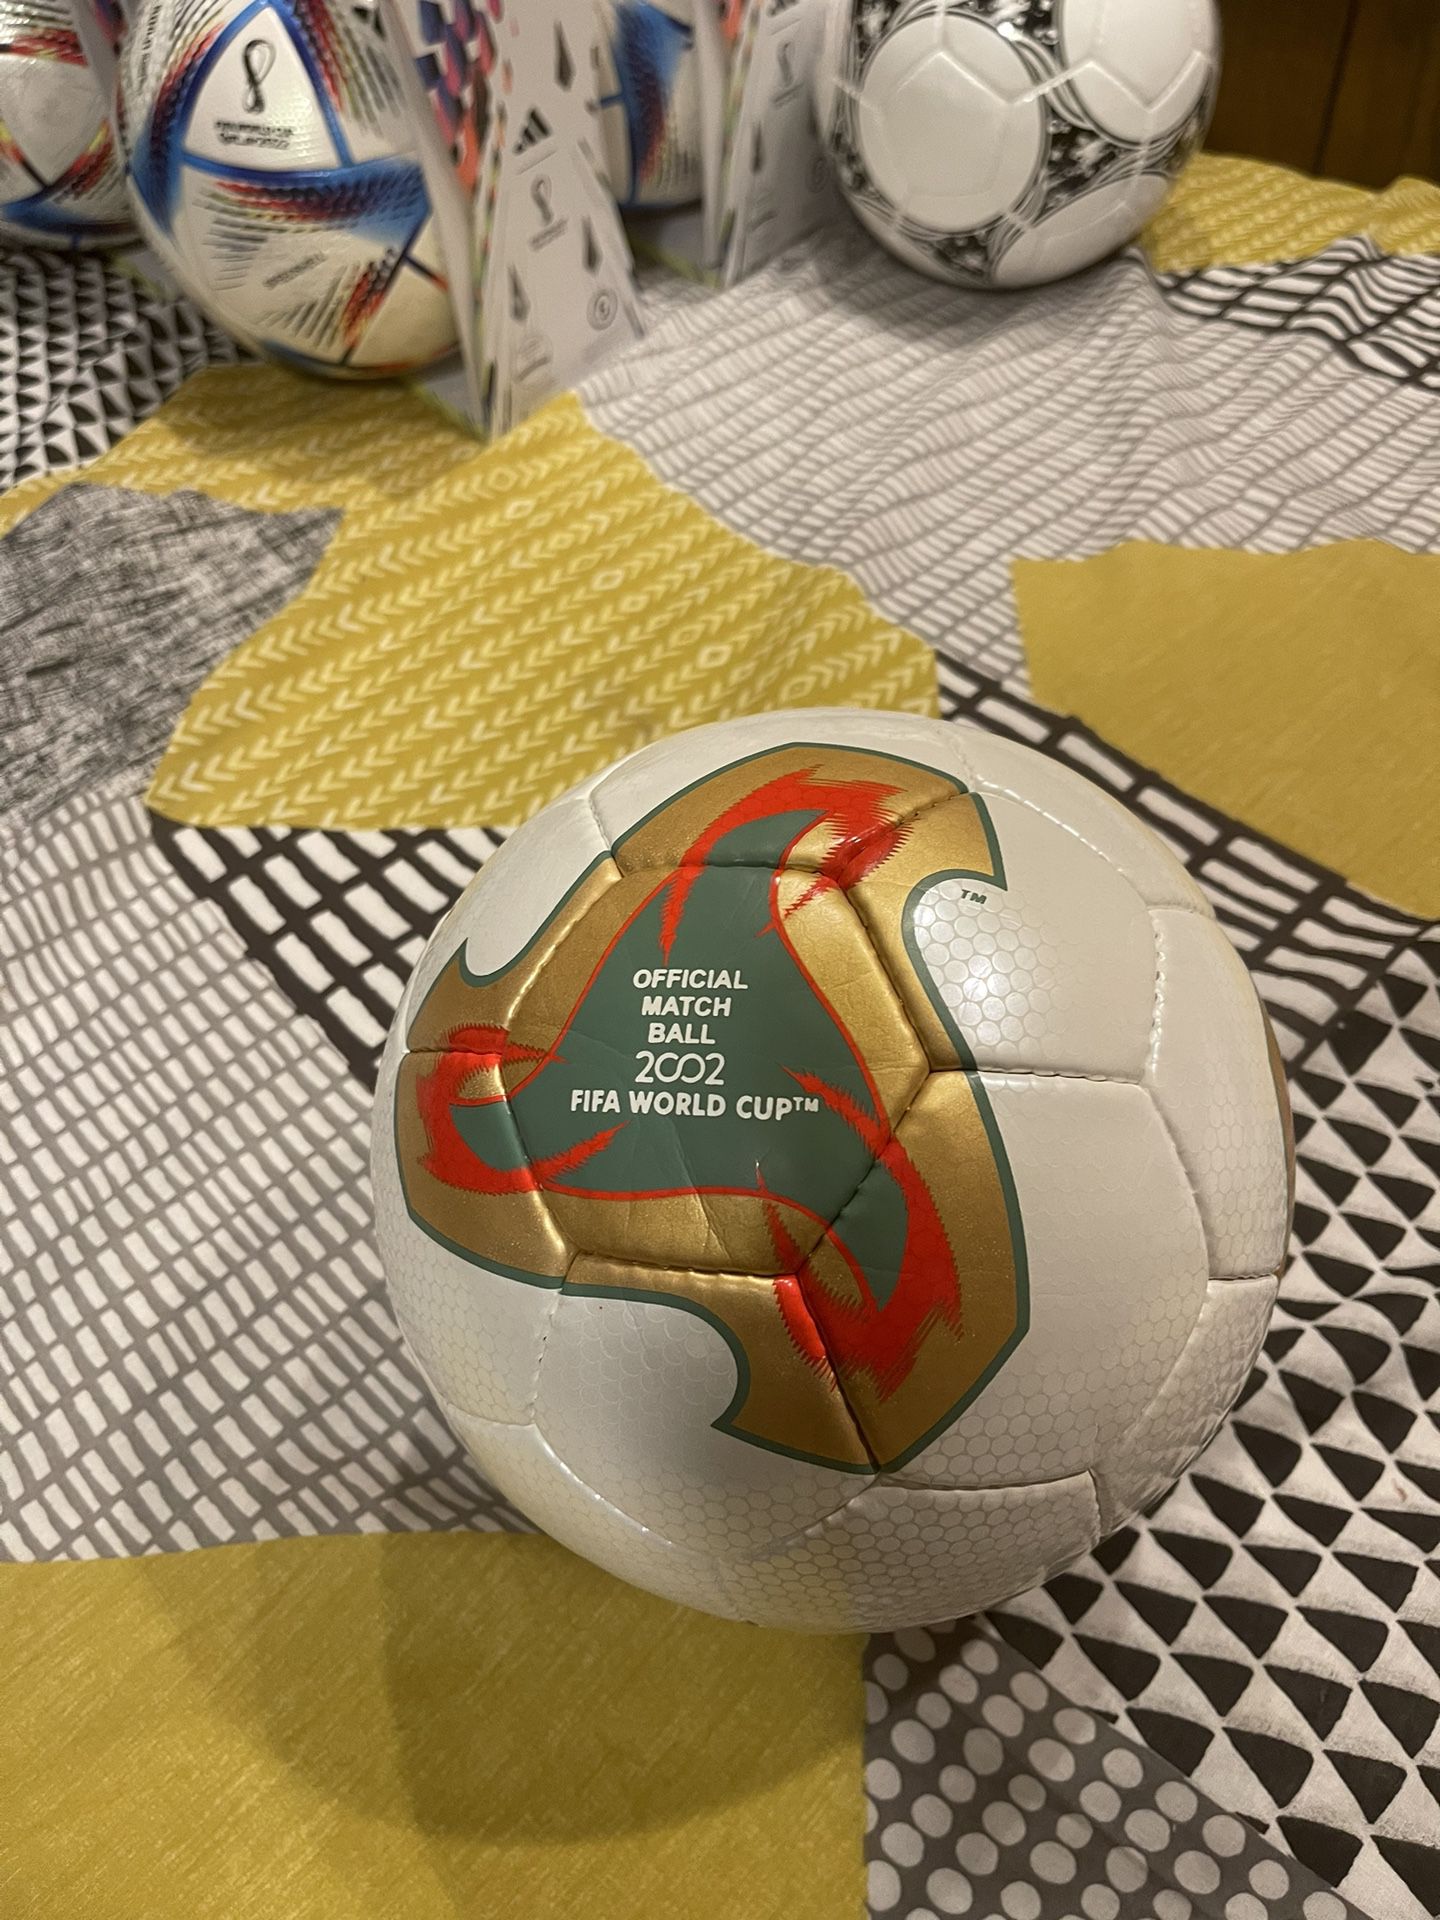 Adidas Fevernova 2002 Fifa World Cup tournament Match Ball size 5